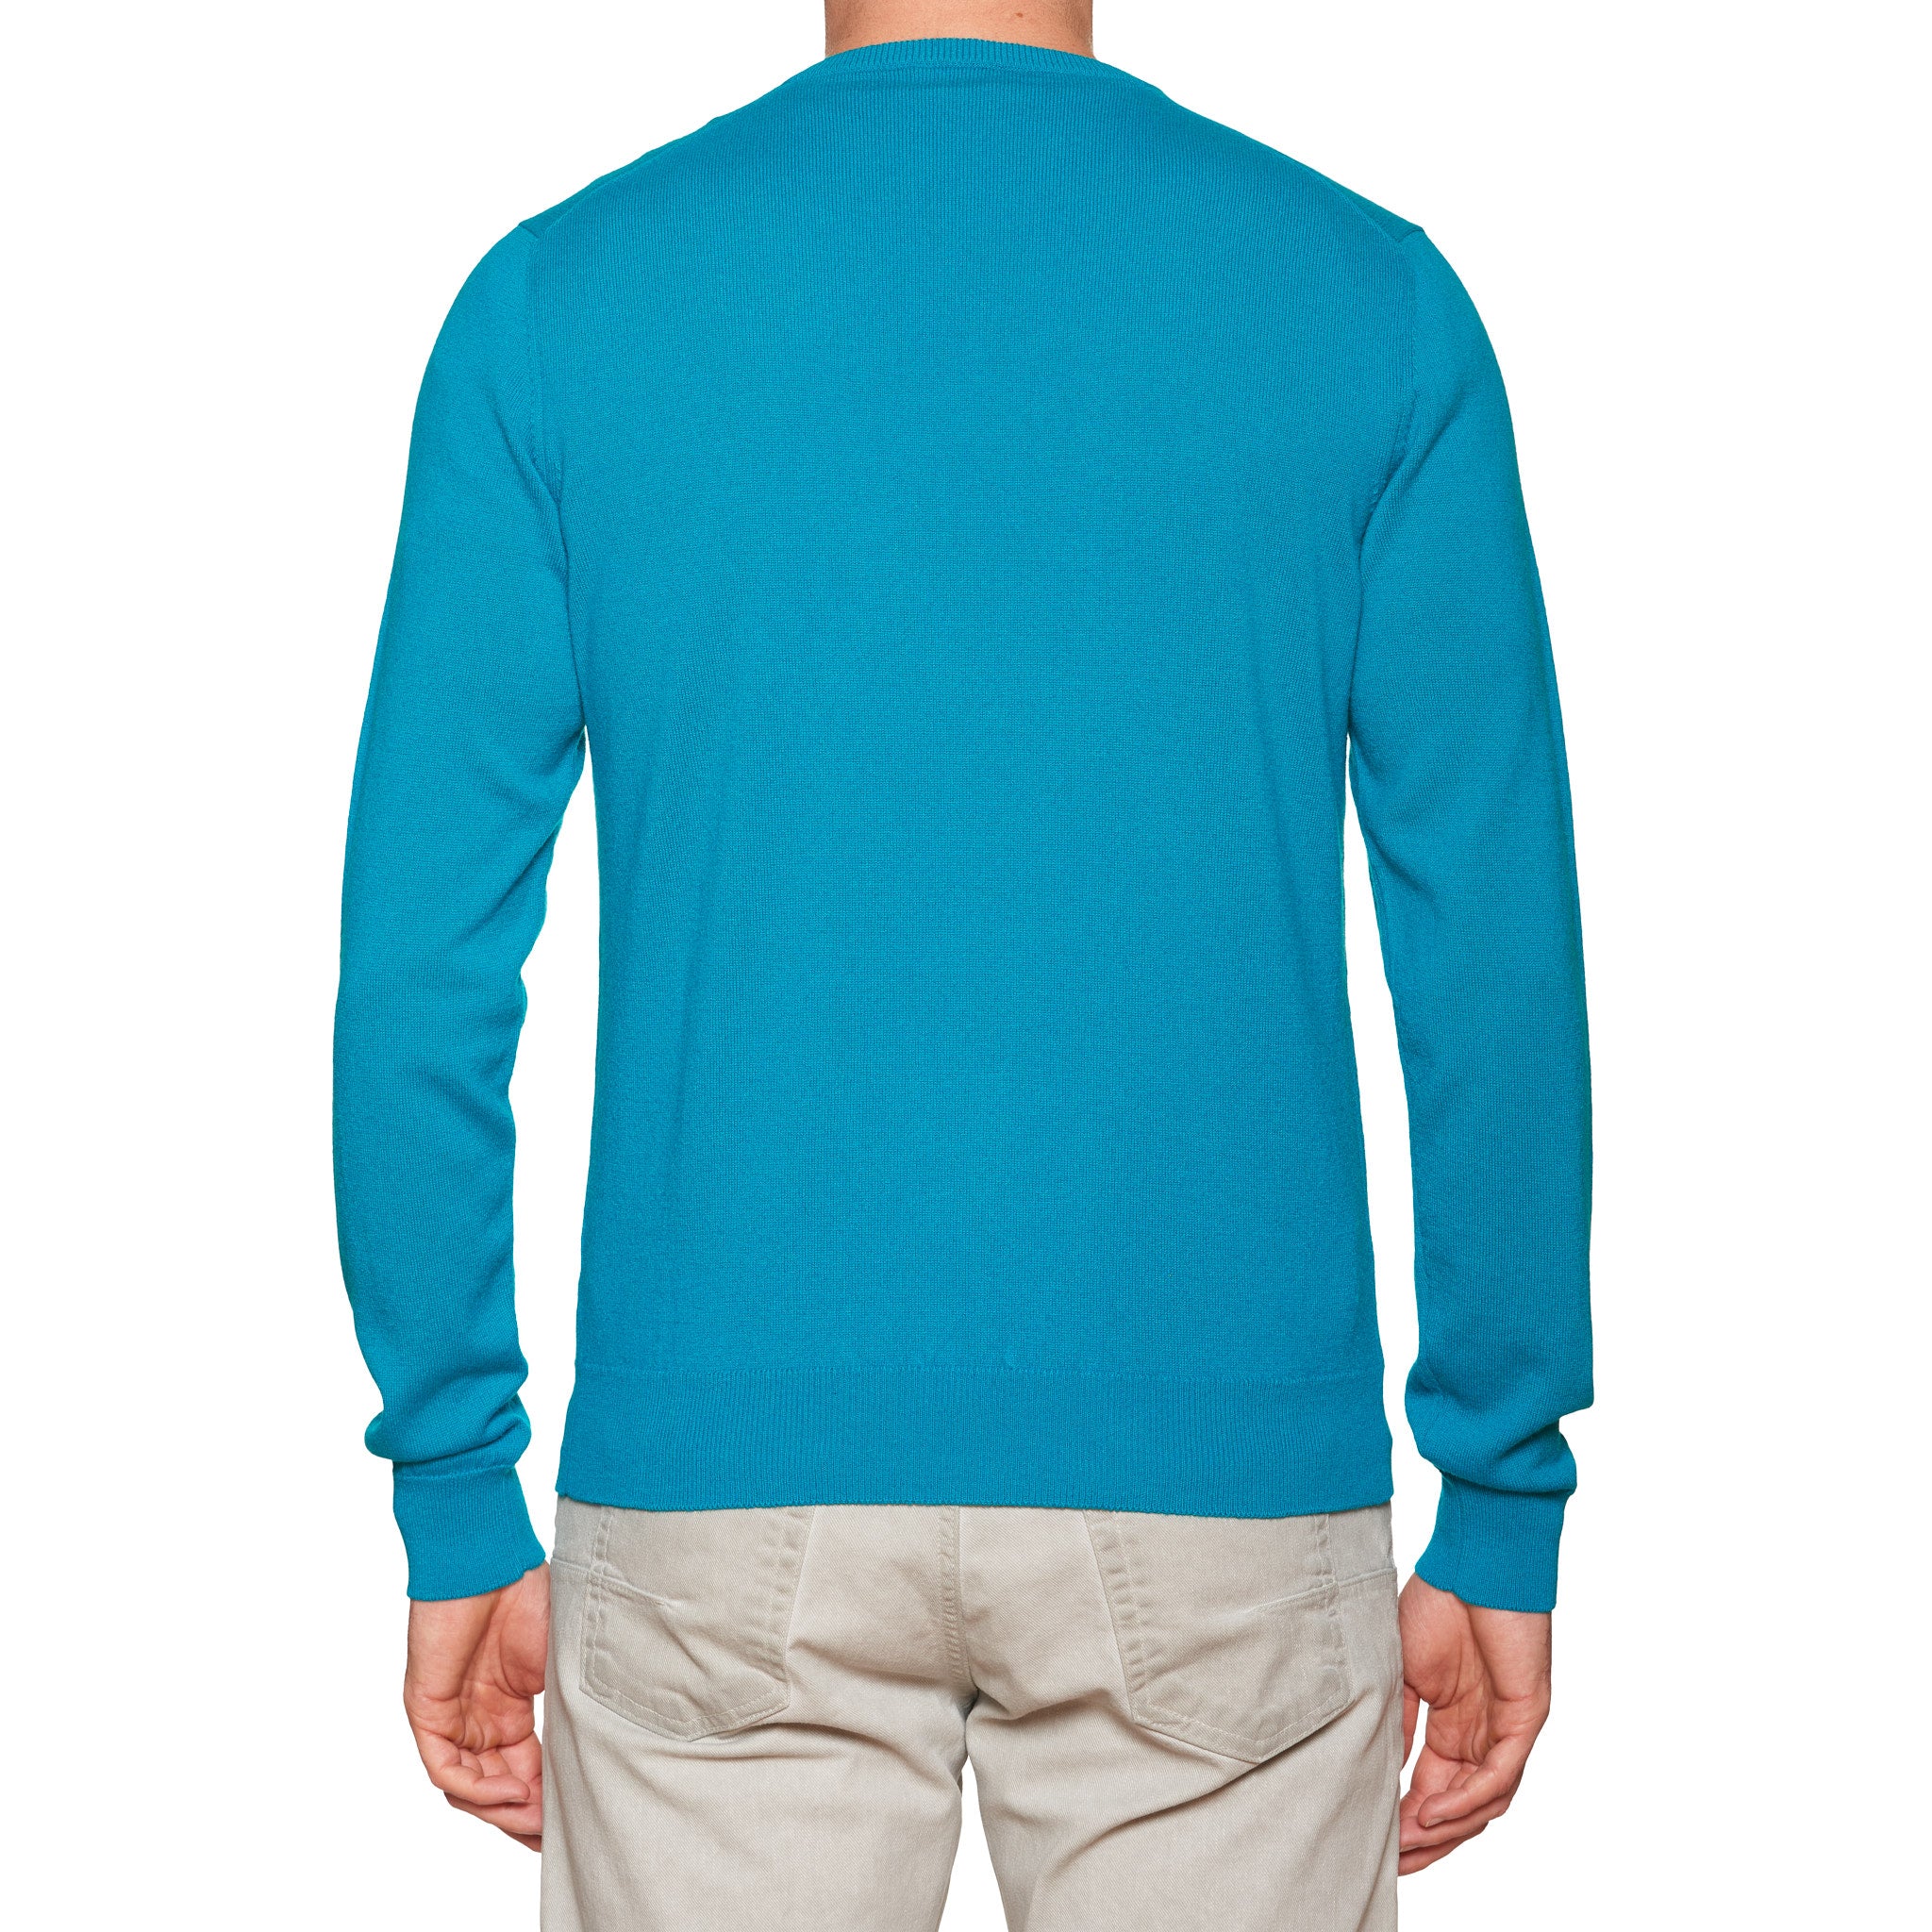 FEDELI Aqua Blue Cashmere V-Neck Sweater NEW FEDELI